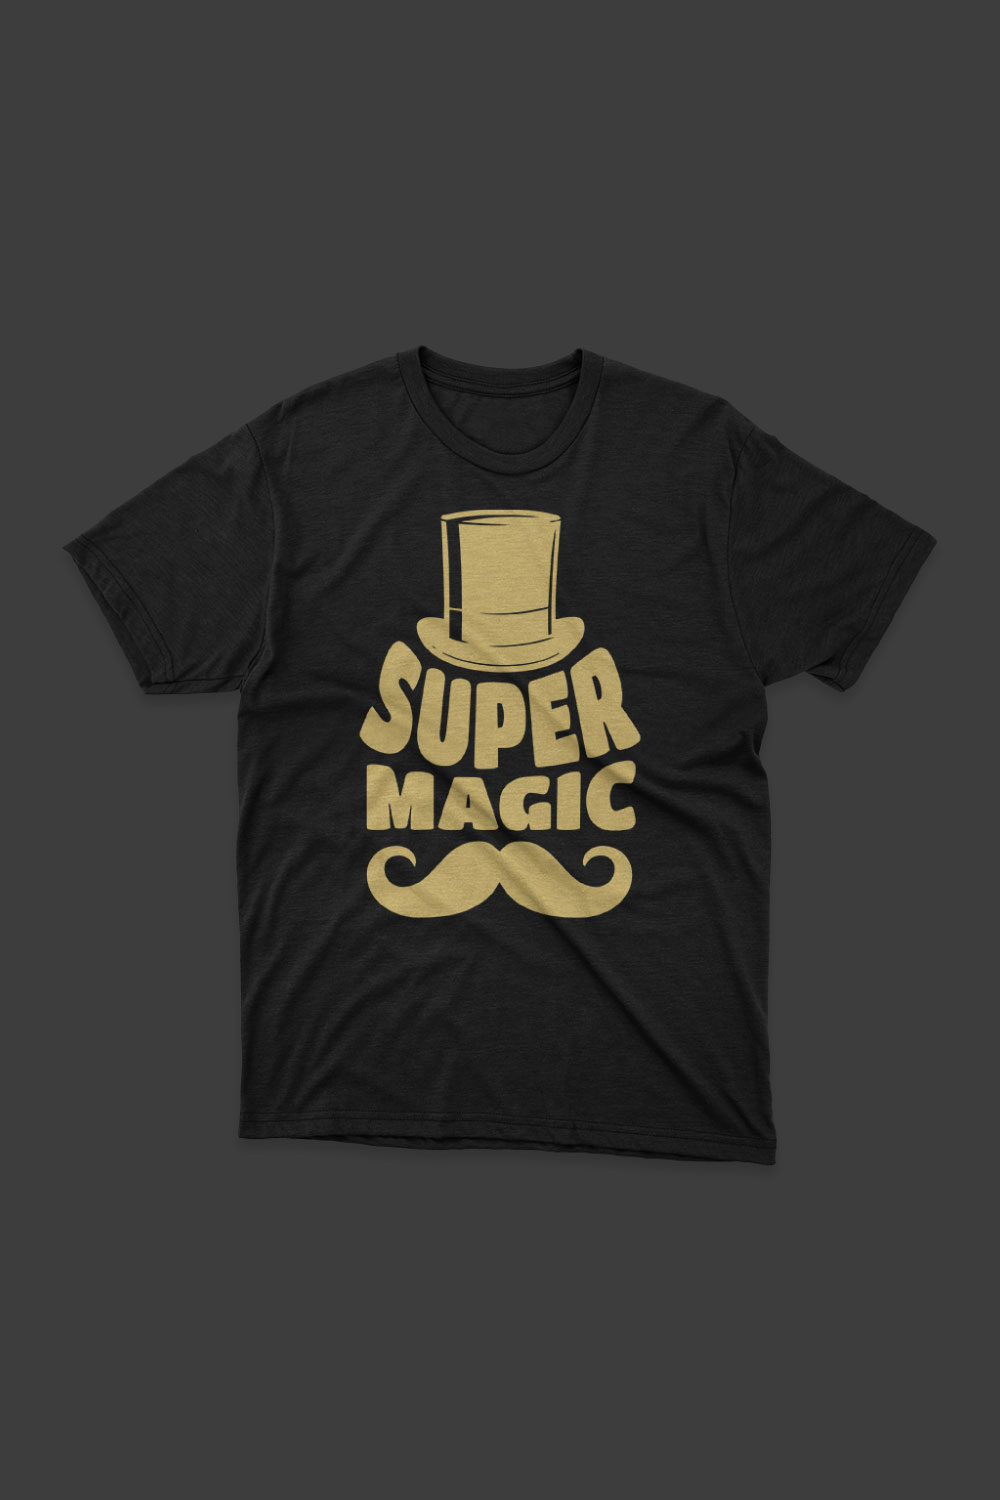 Super Magic T Shirt Design pinterest preview image.